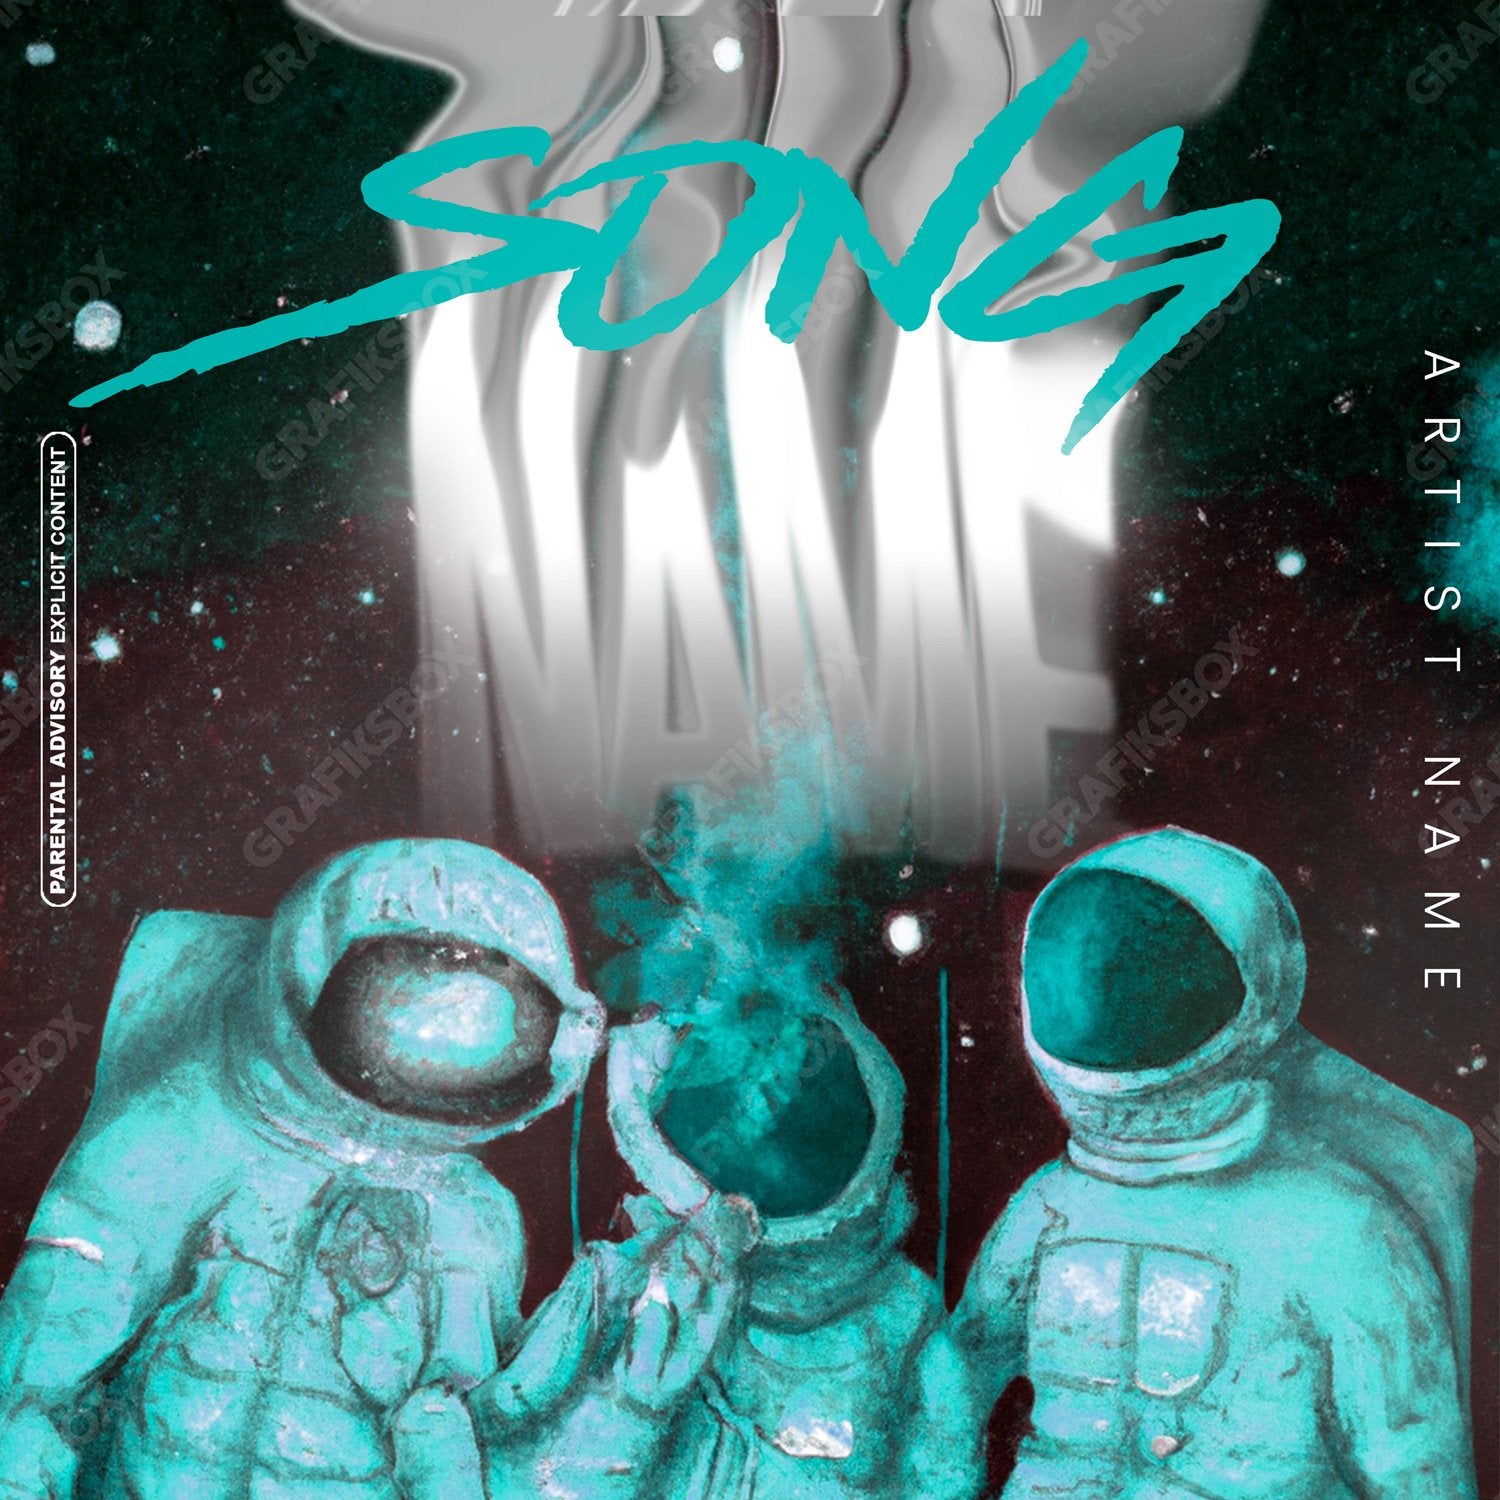 Space Smoke premade cover art